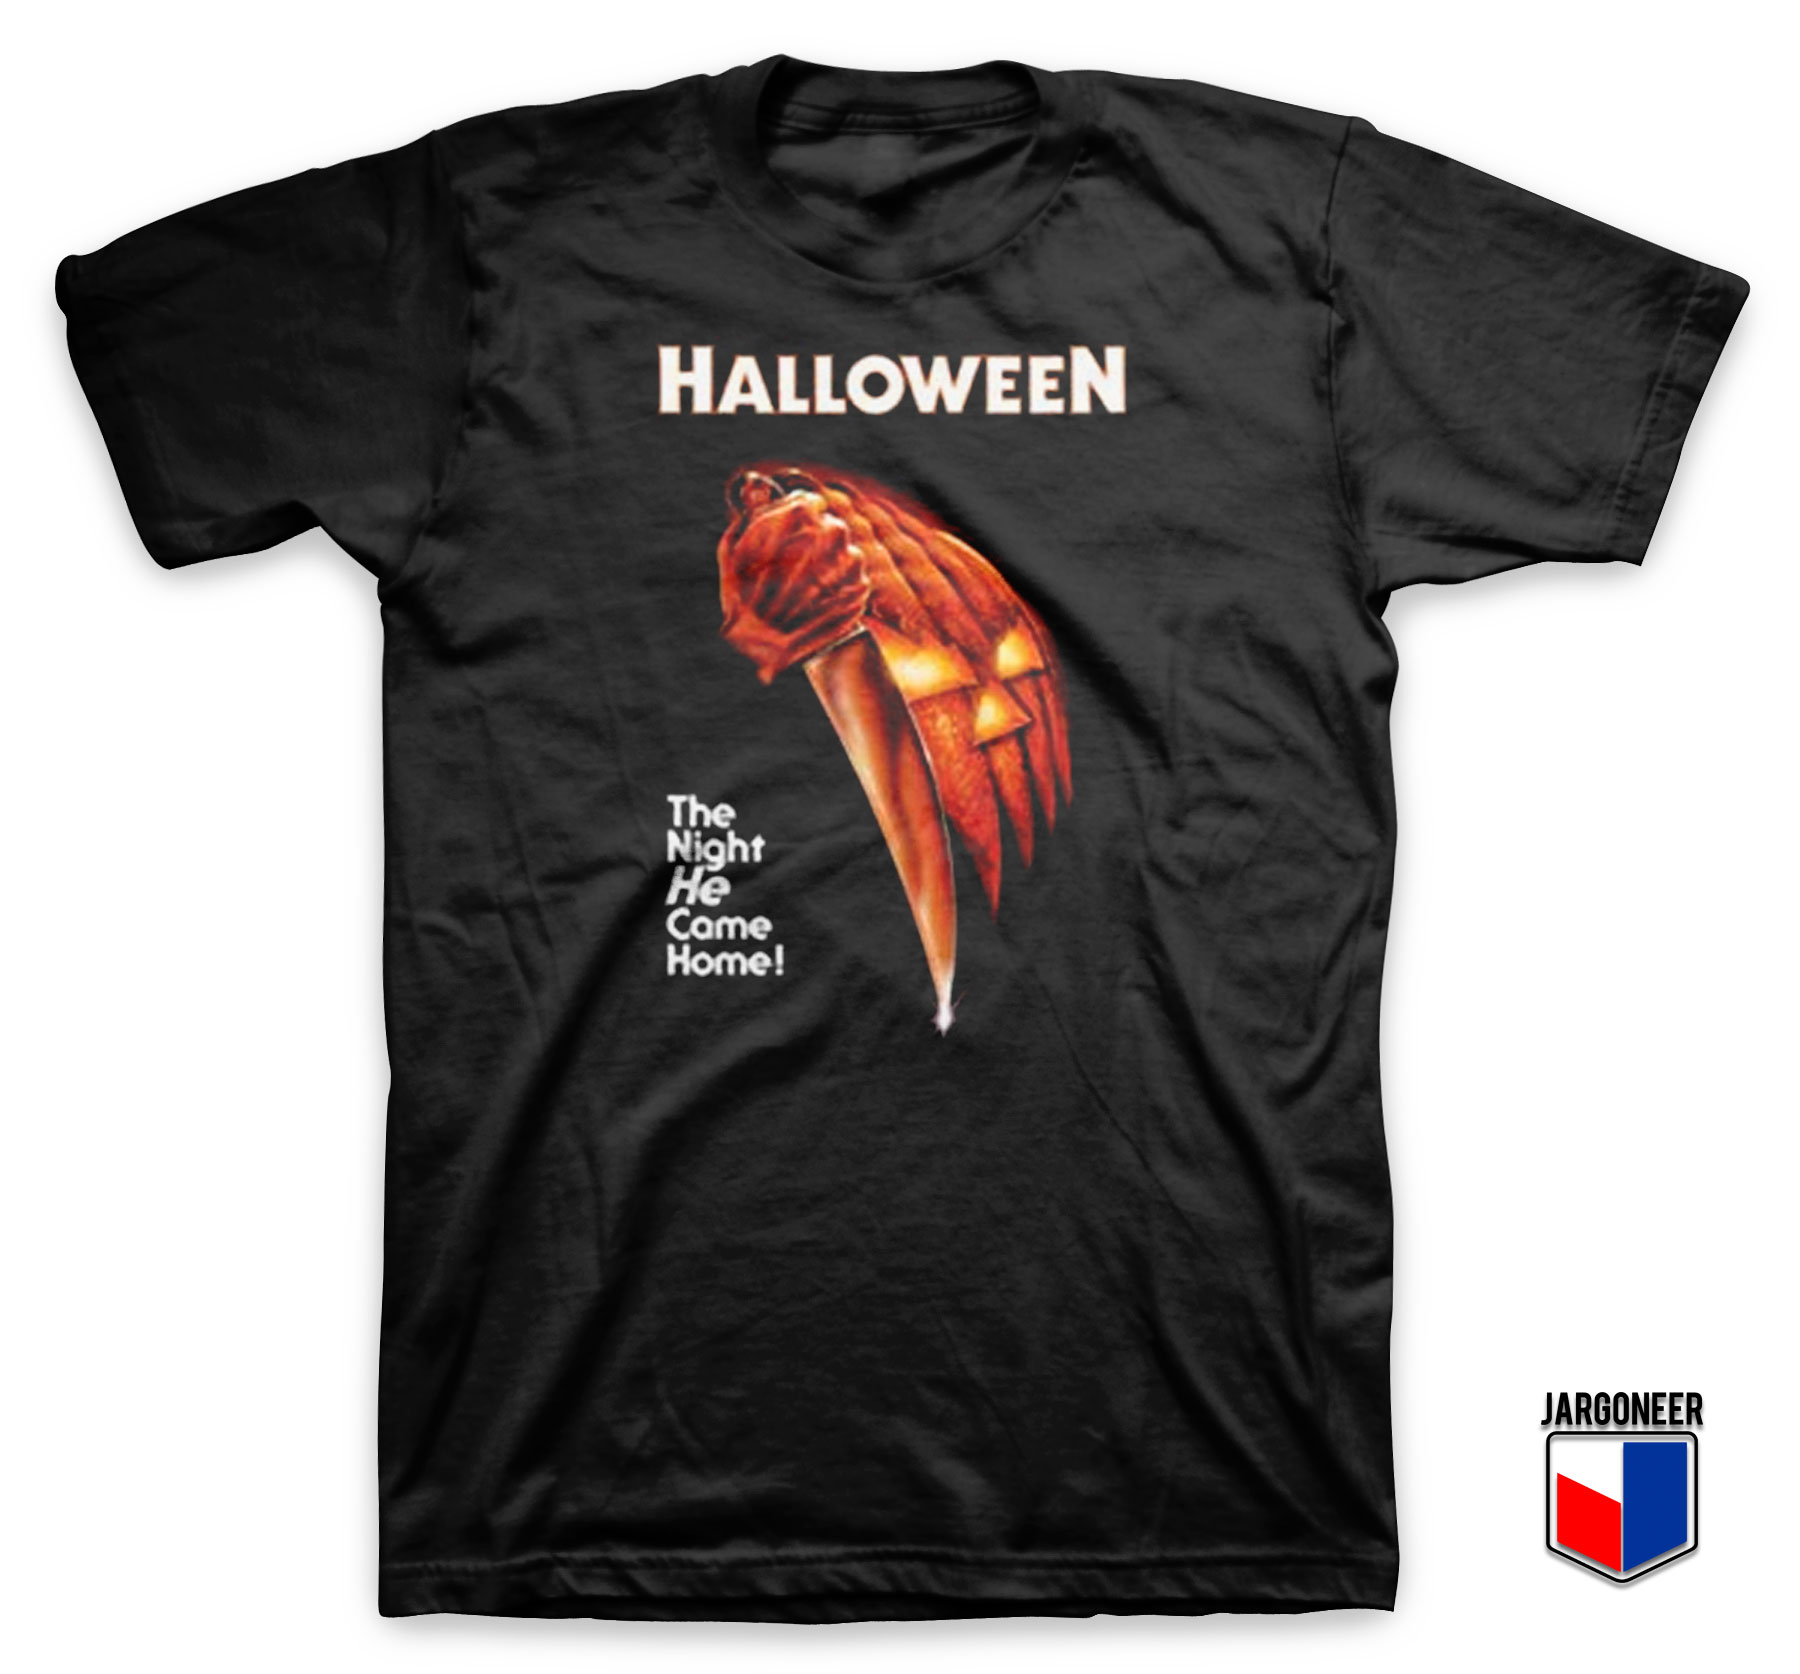 Halloween He Come Home T Shirt - Shop Unique Graphic Cool Shirt Designs